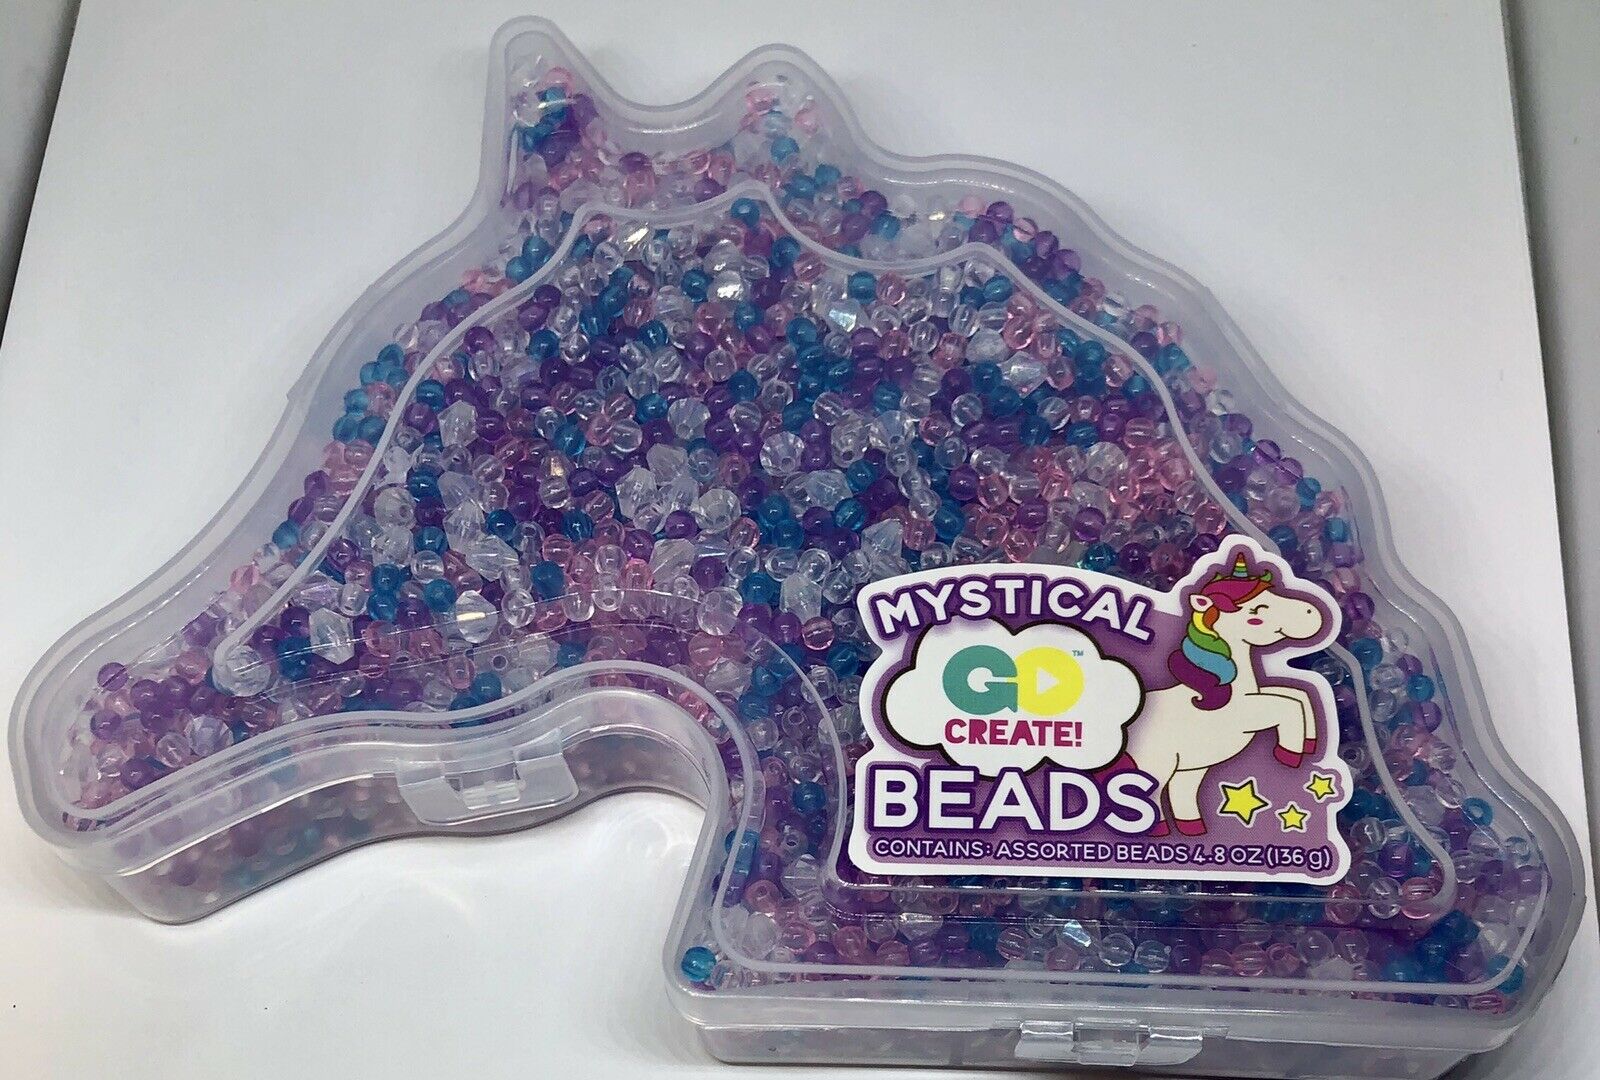 Mystical Unicorn Go Create Beads, Assorted Round Beads 4.8 Oz Crafts, Kids